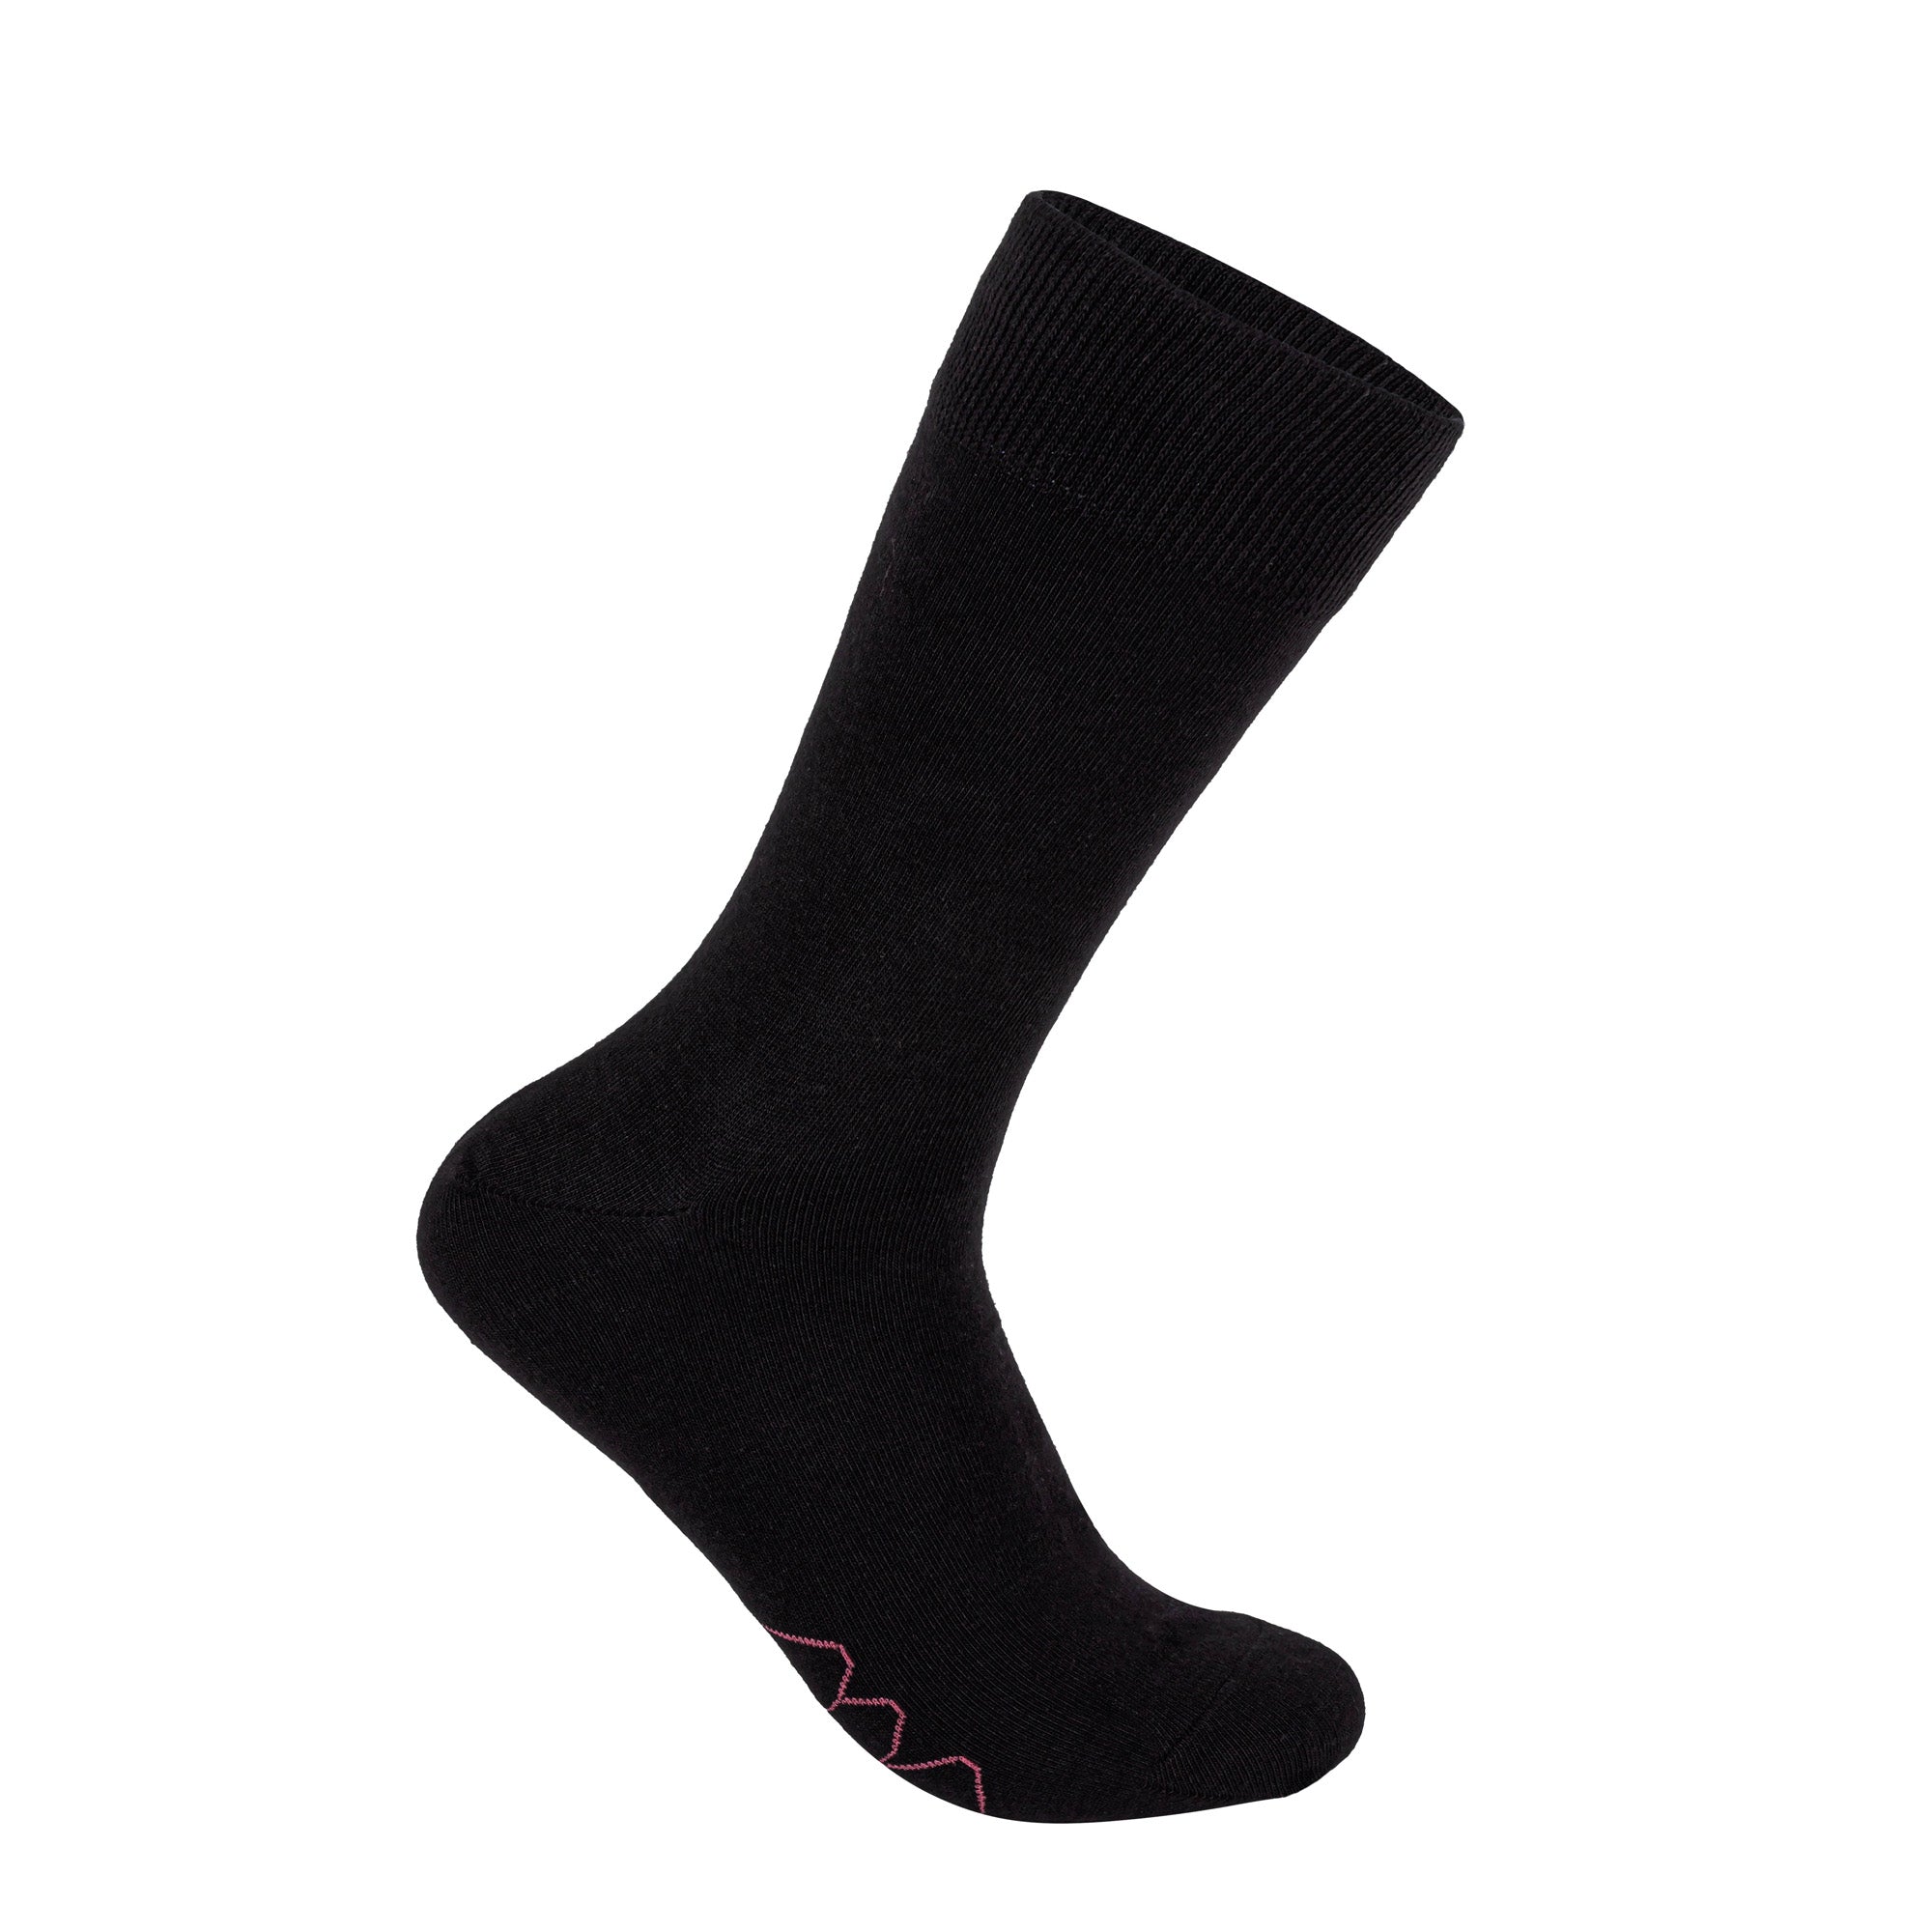 A_Week_Of_Socks_Socks_square_mid-calf_black_product